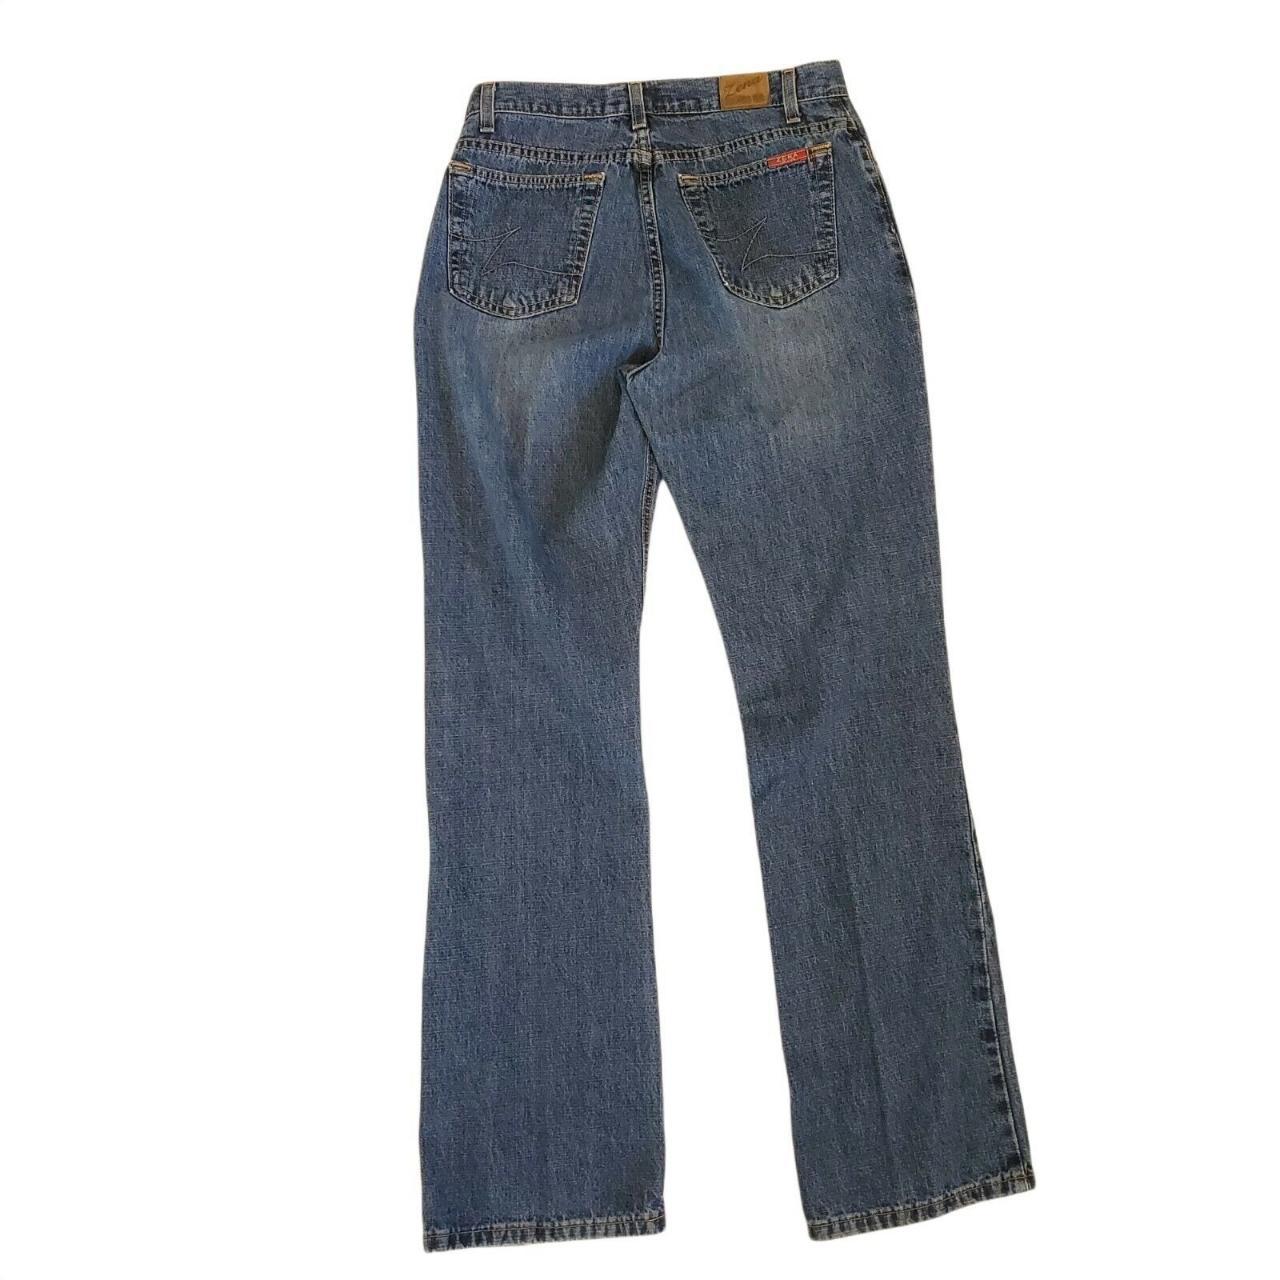 Vintage Zena Jeans High Waisted Mom Jeans Button Zip... - Depop